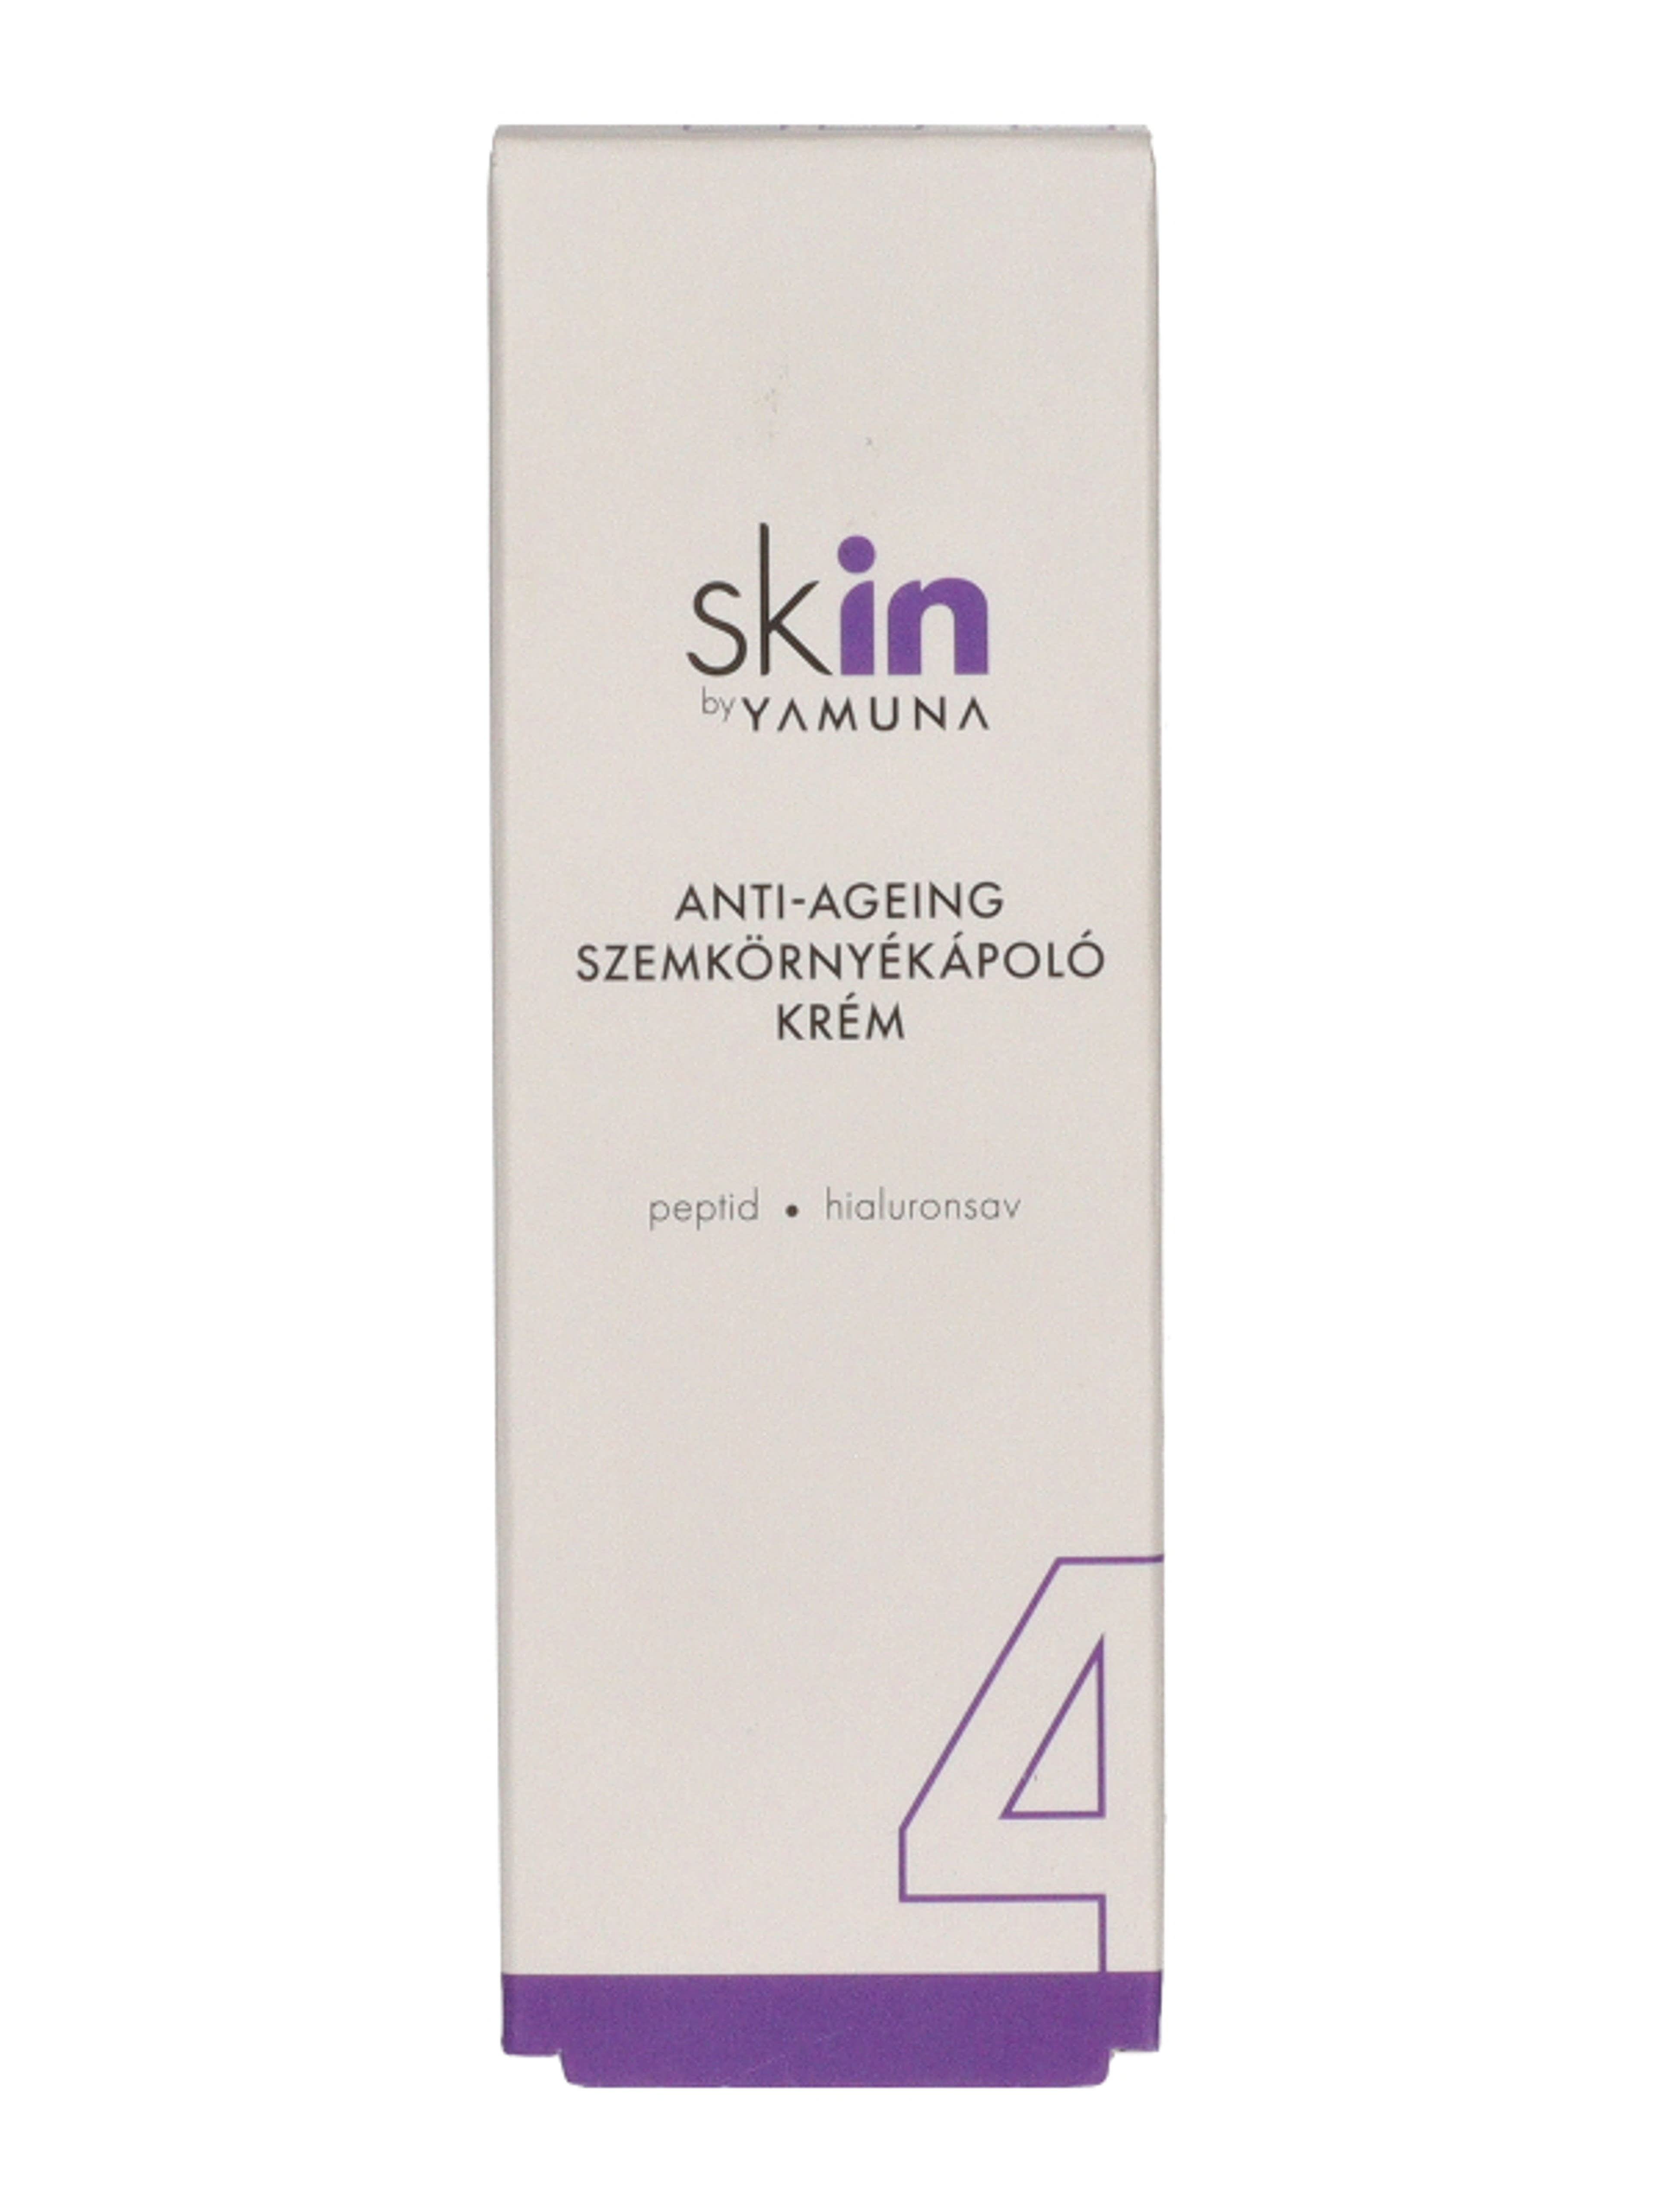 Yamuna Skin Anti-ageing szemkörnyékápoló - 15 ml-2